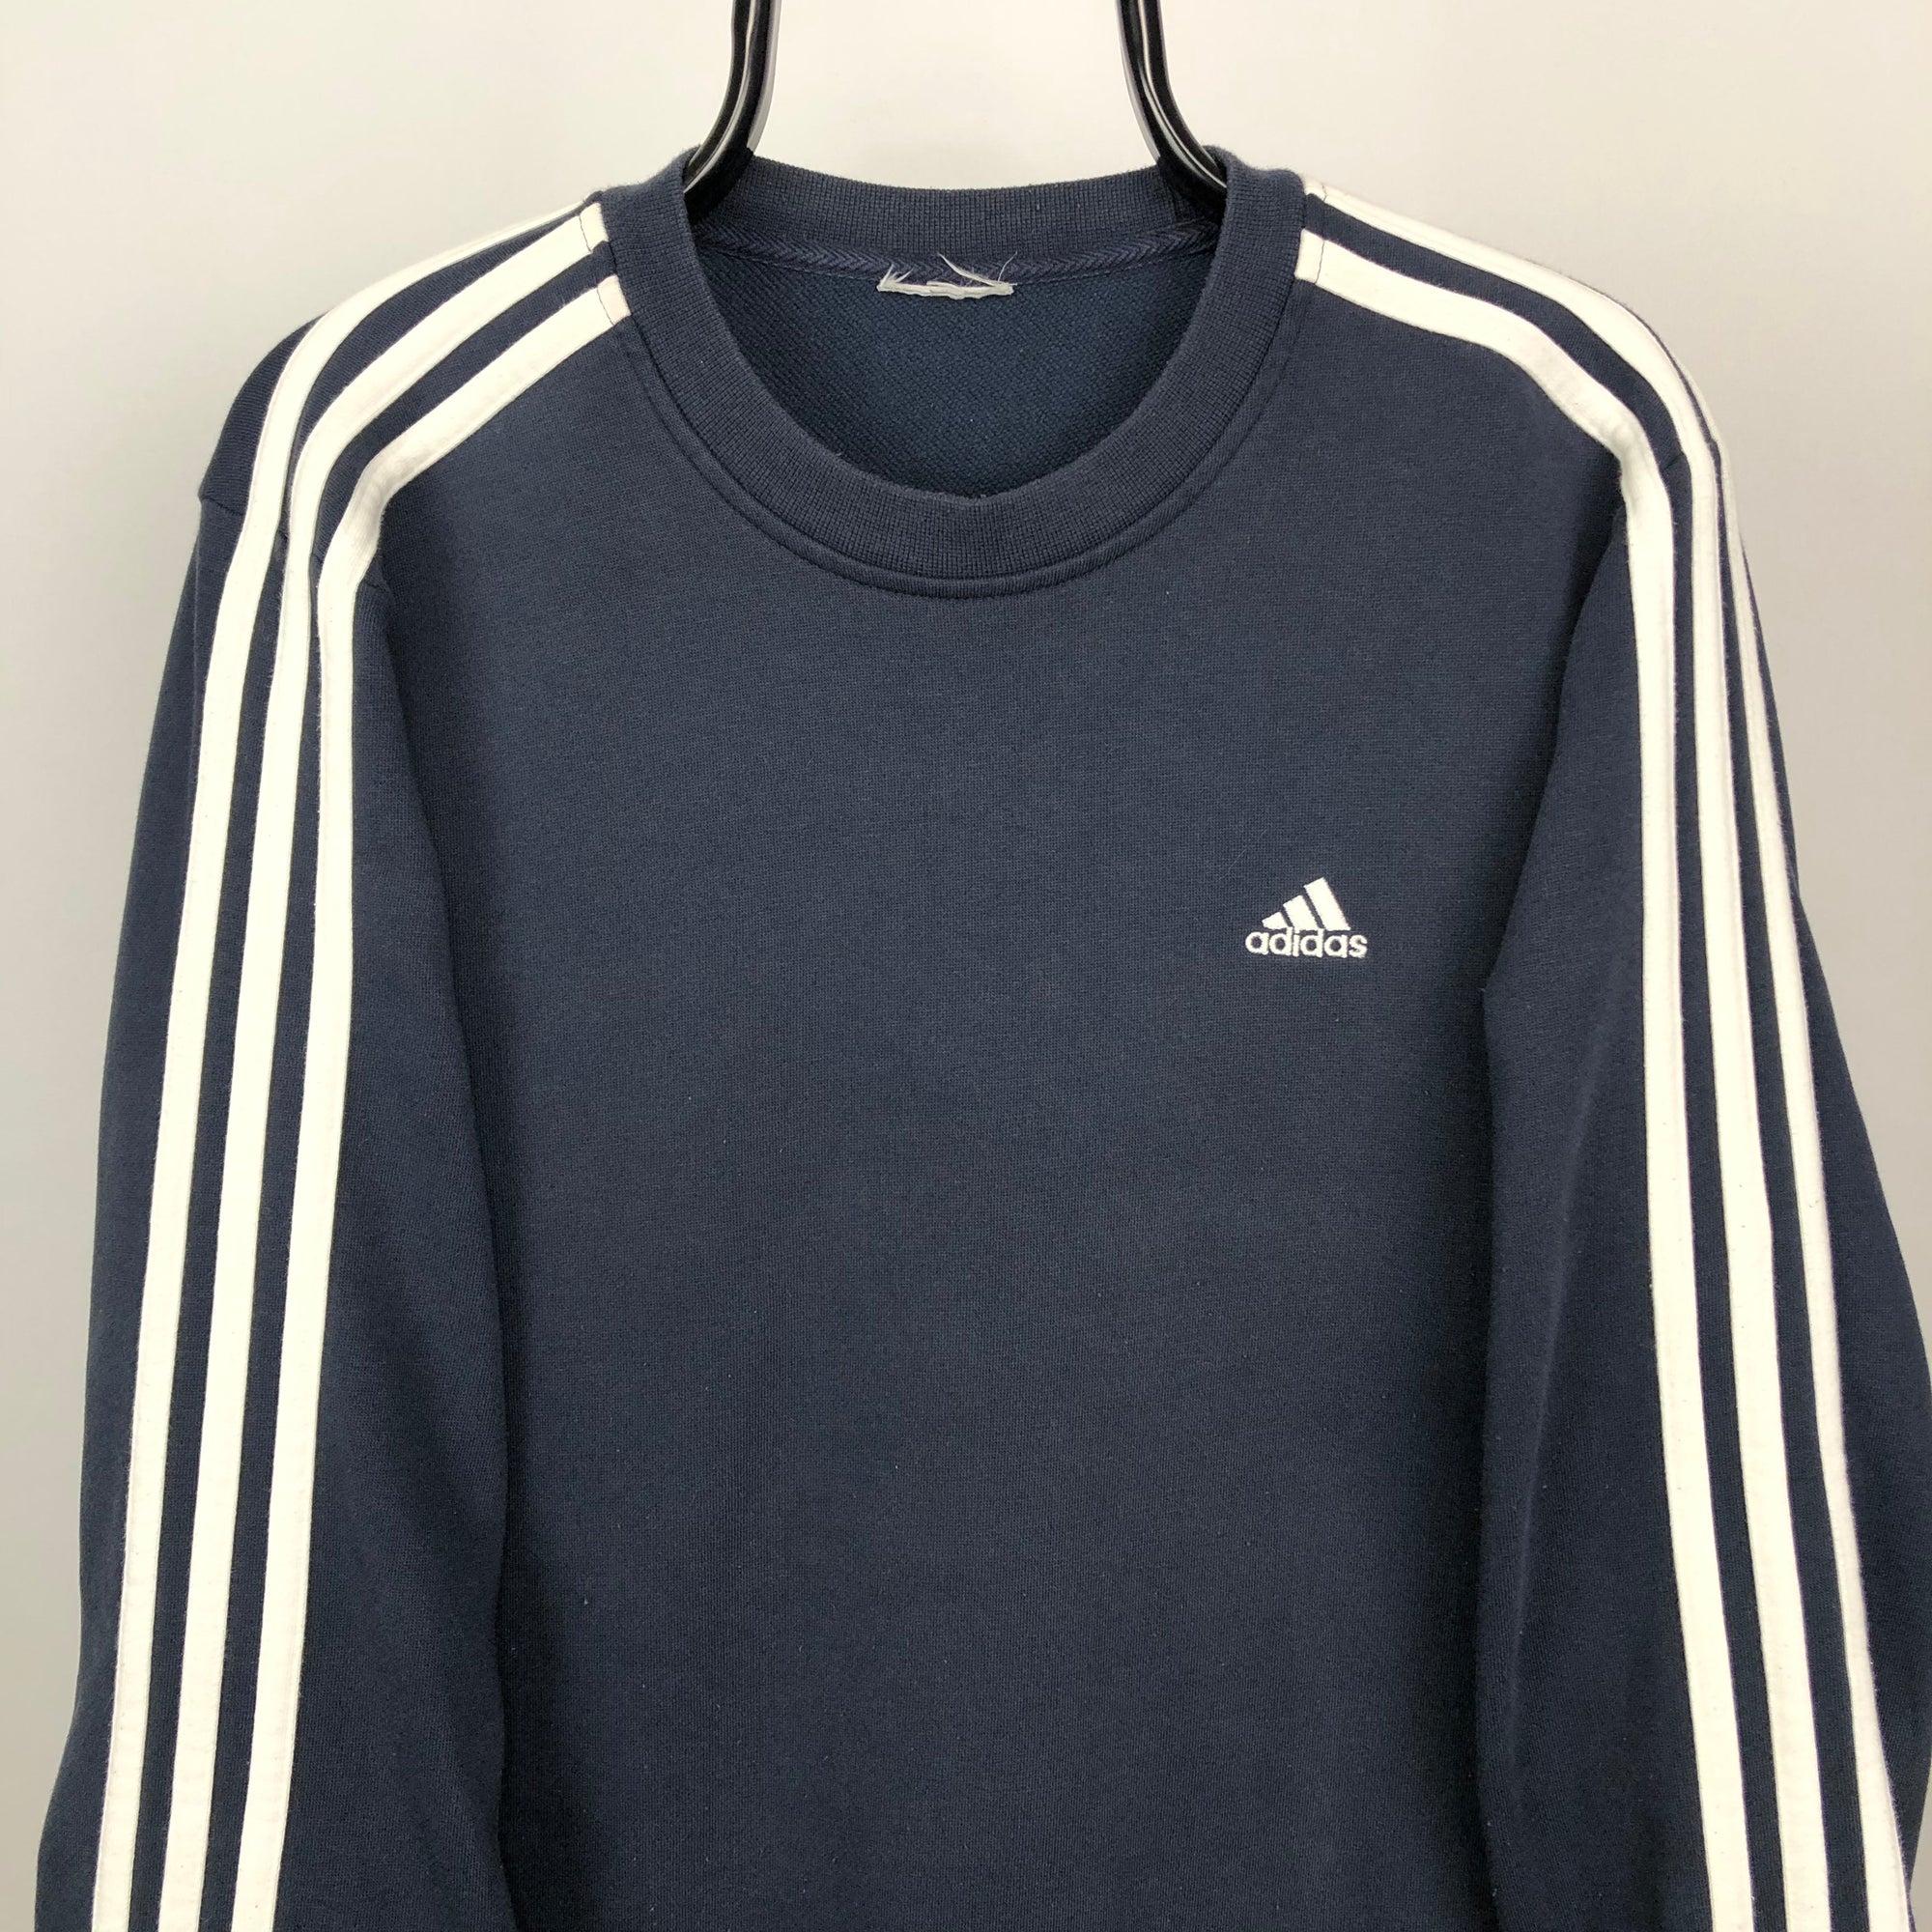 Vintage Adidas Embroidered Small Logo Sweatshirt in Navy - Men's Medium/Women's Large